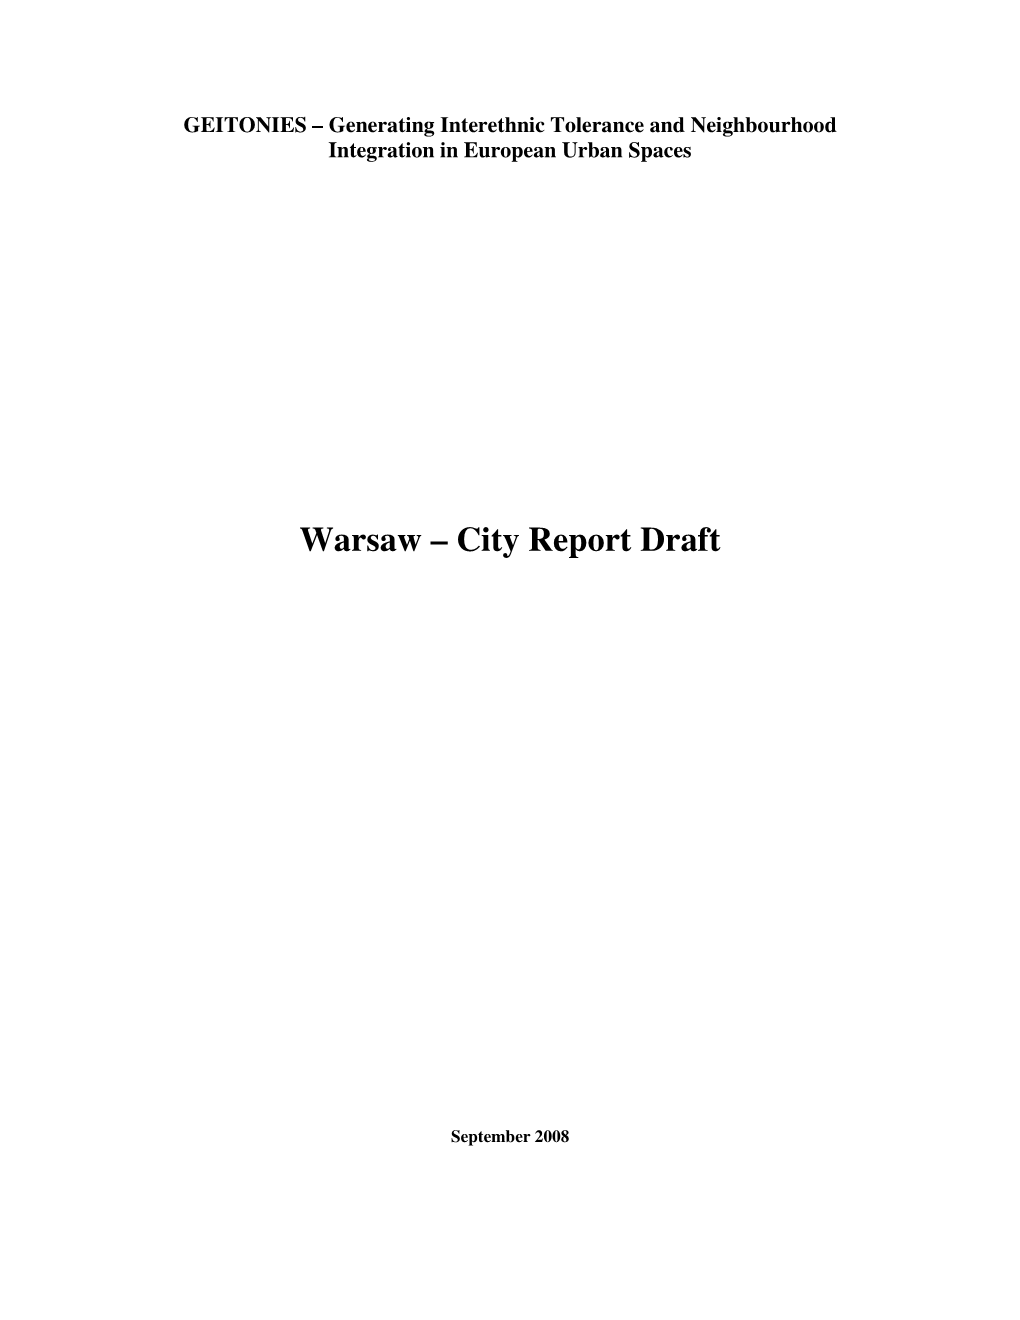 Warsaw – City Report Draft